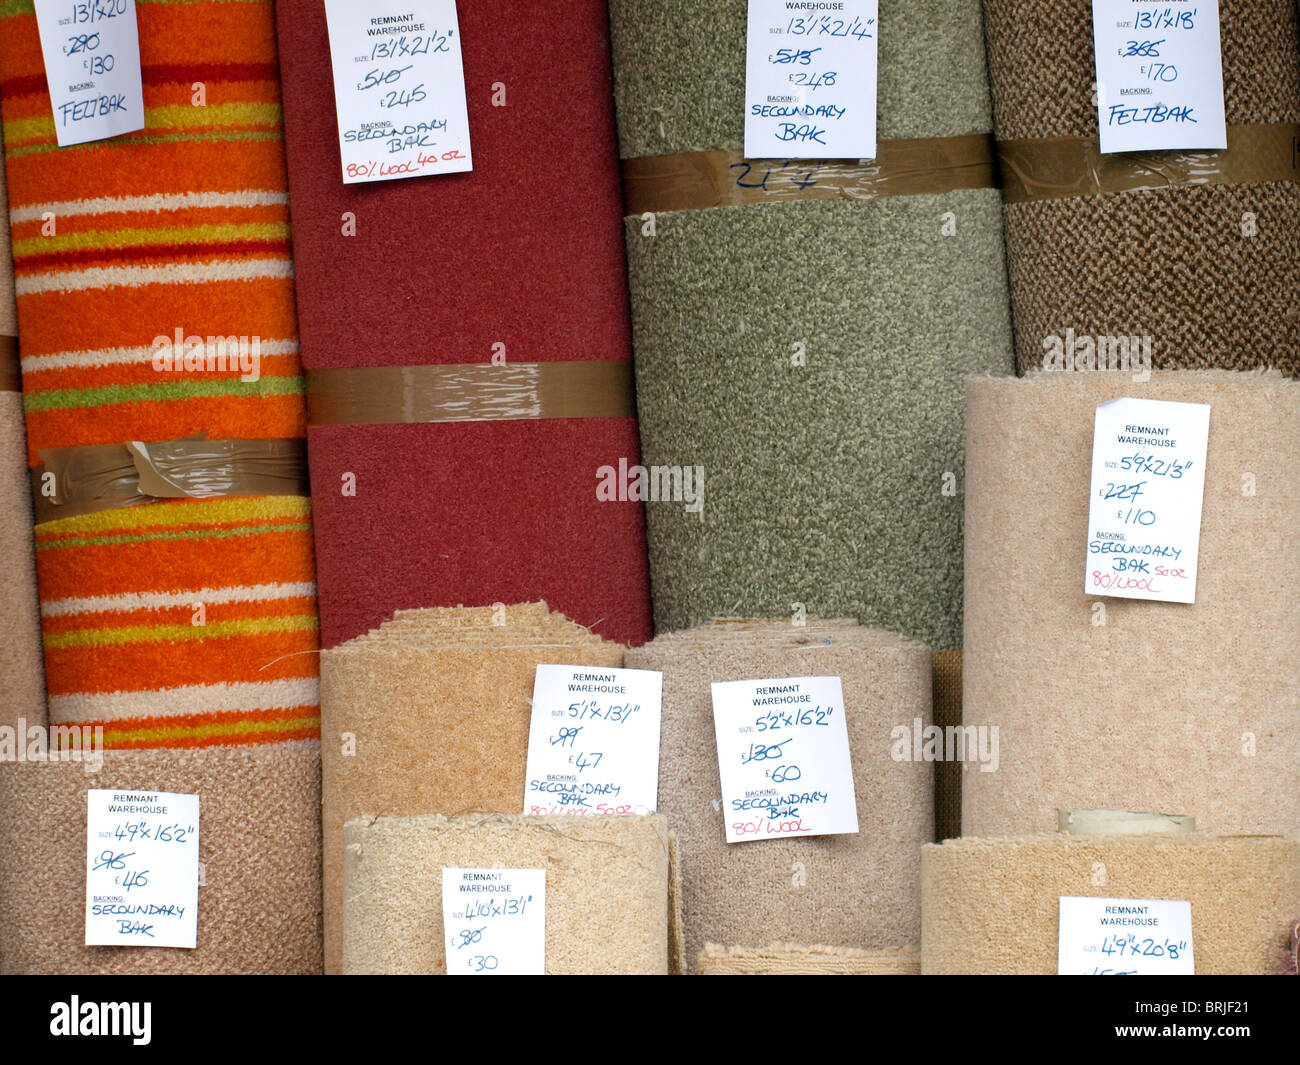 Carpet remnants for sale, Shop, UK Stock Photo